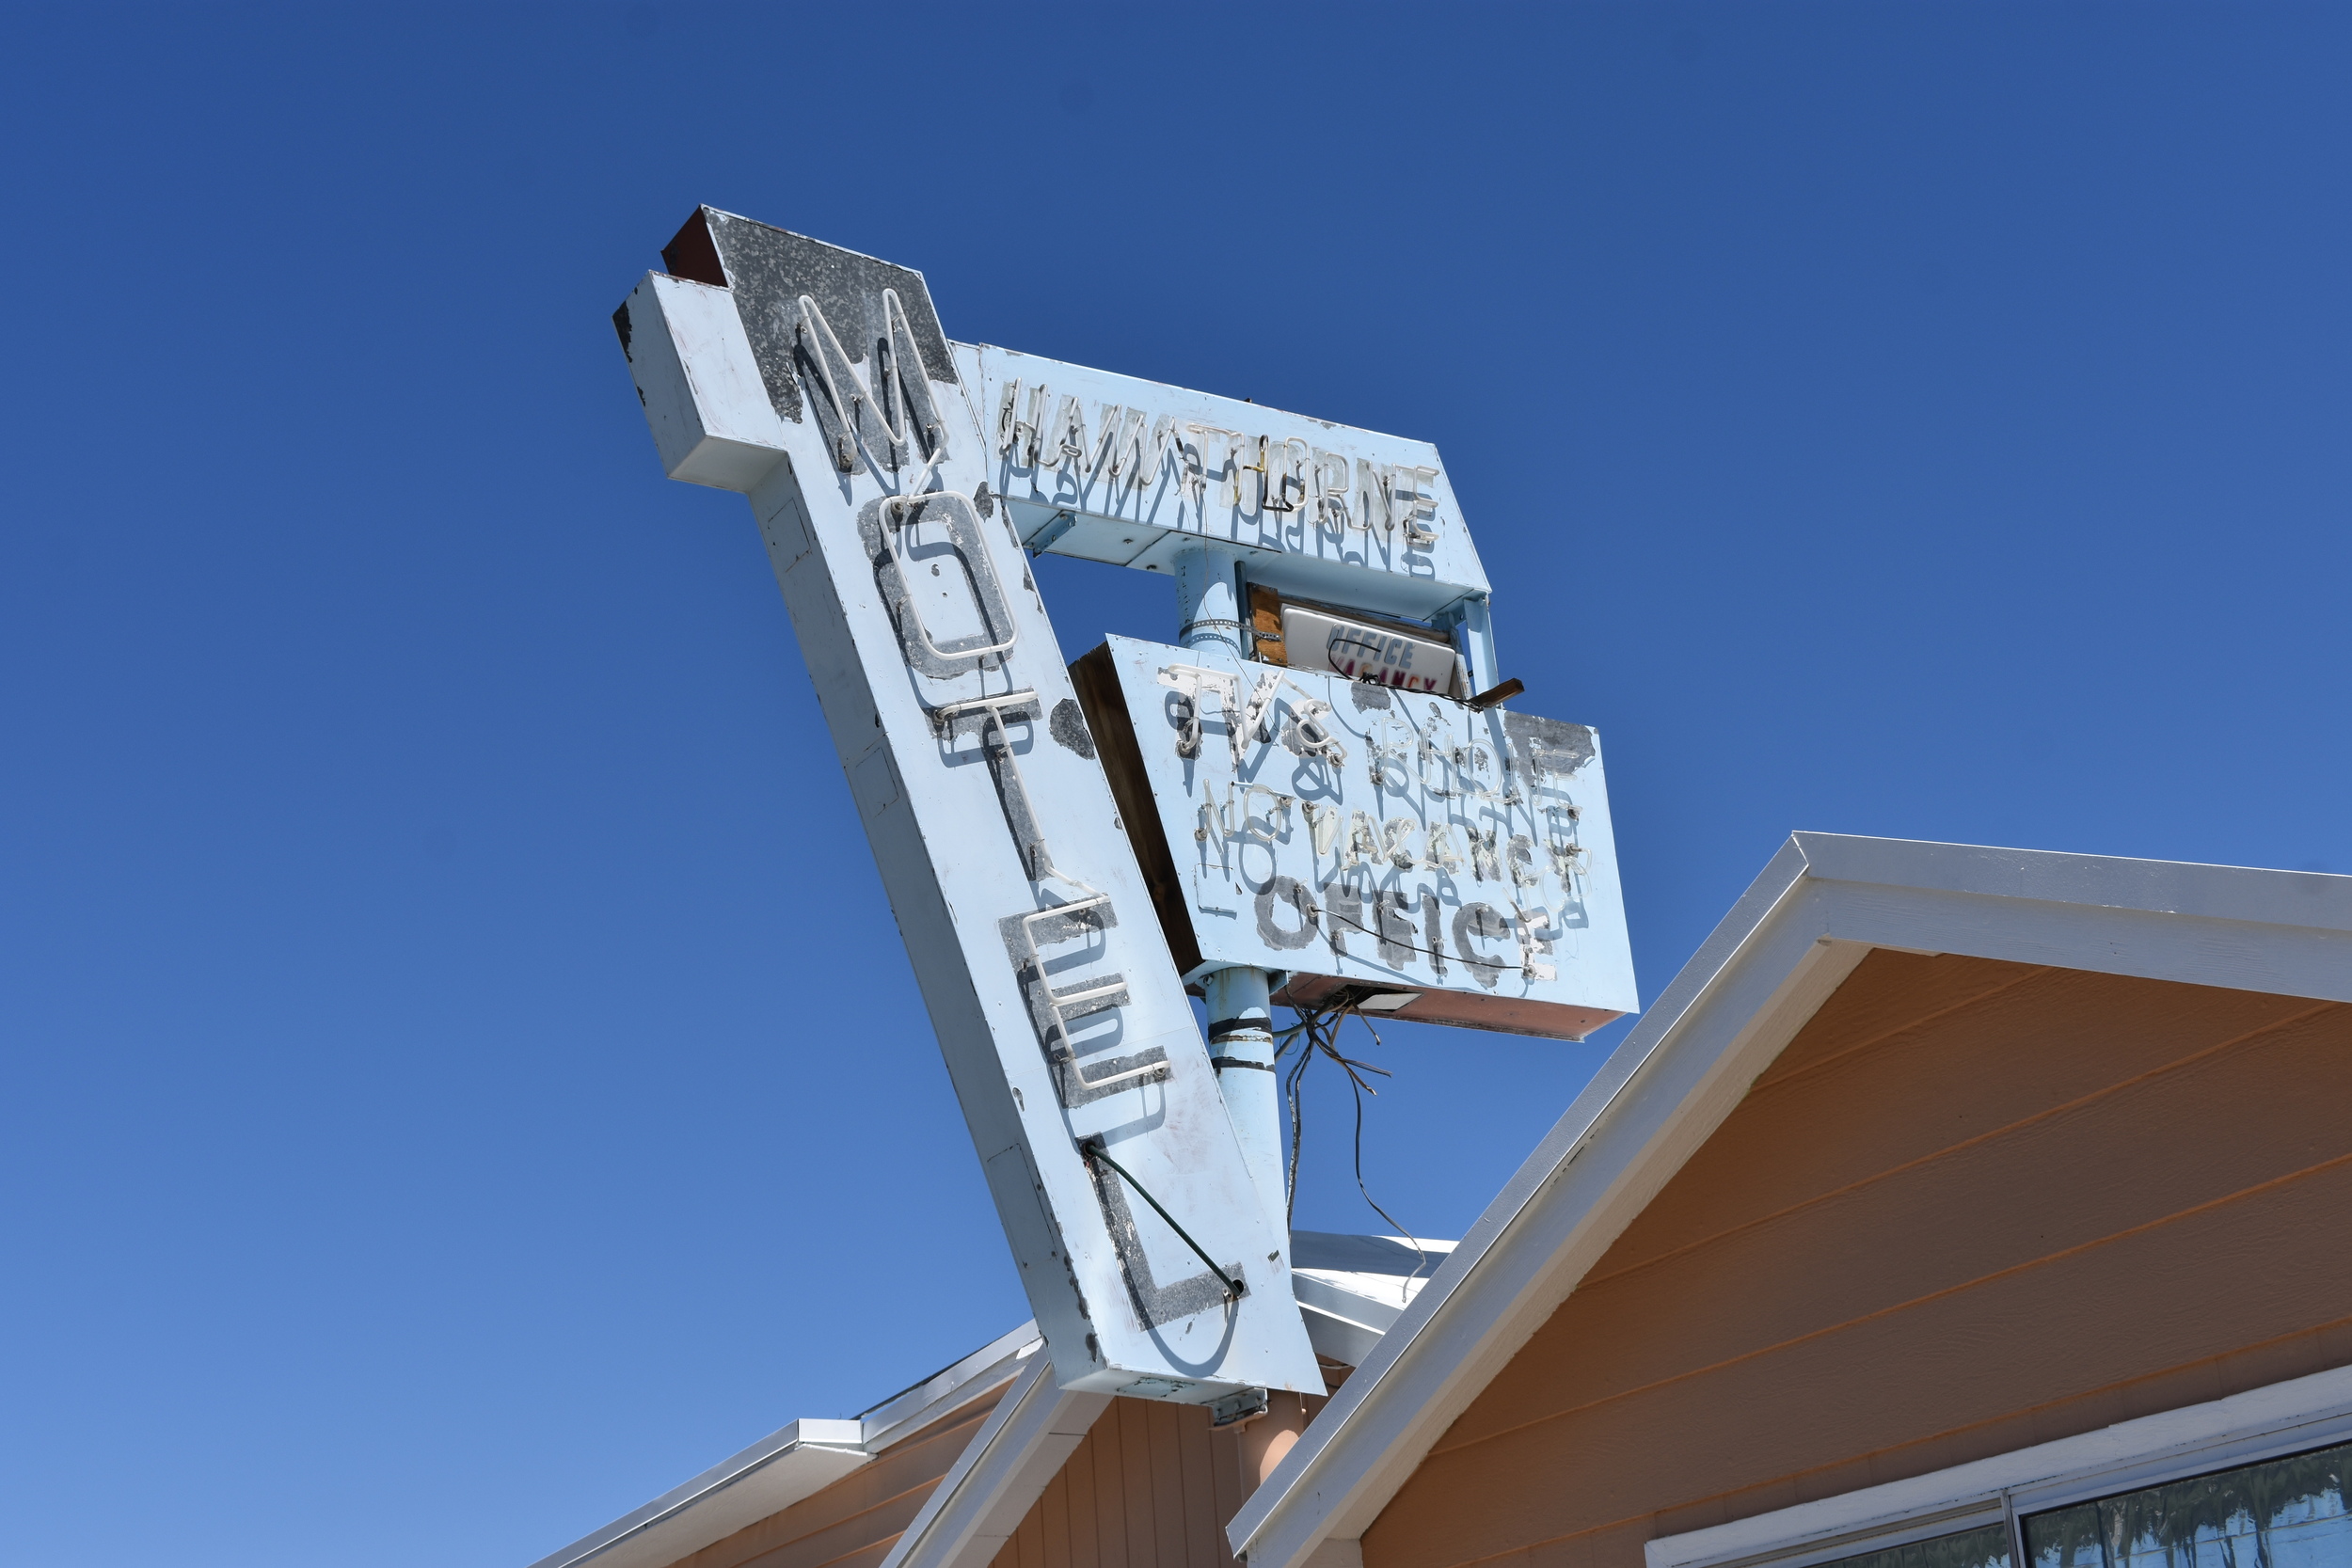 Hawthorne Motel roof mounted sign, Hawthorne, Nevada